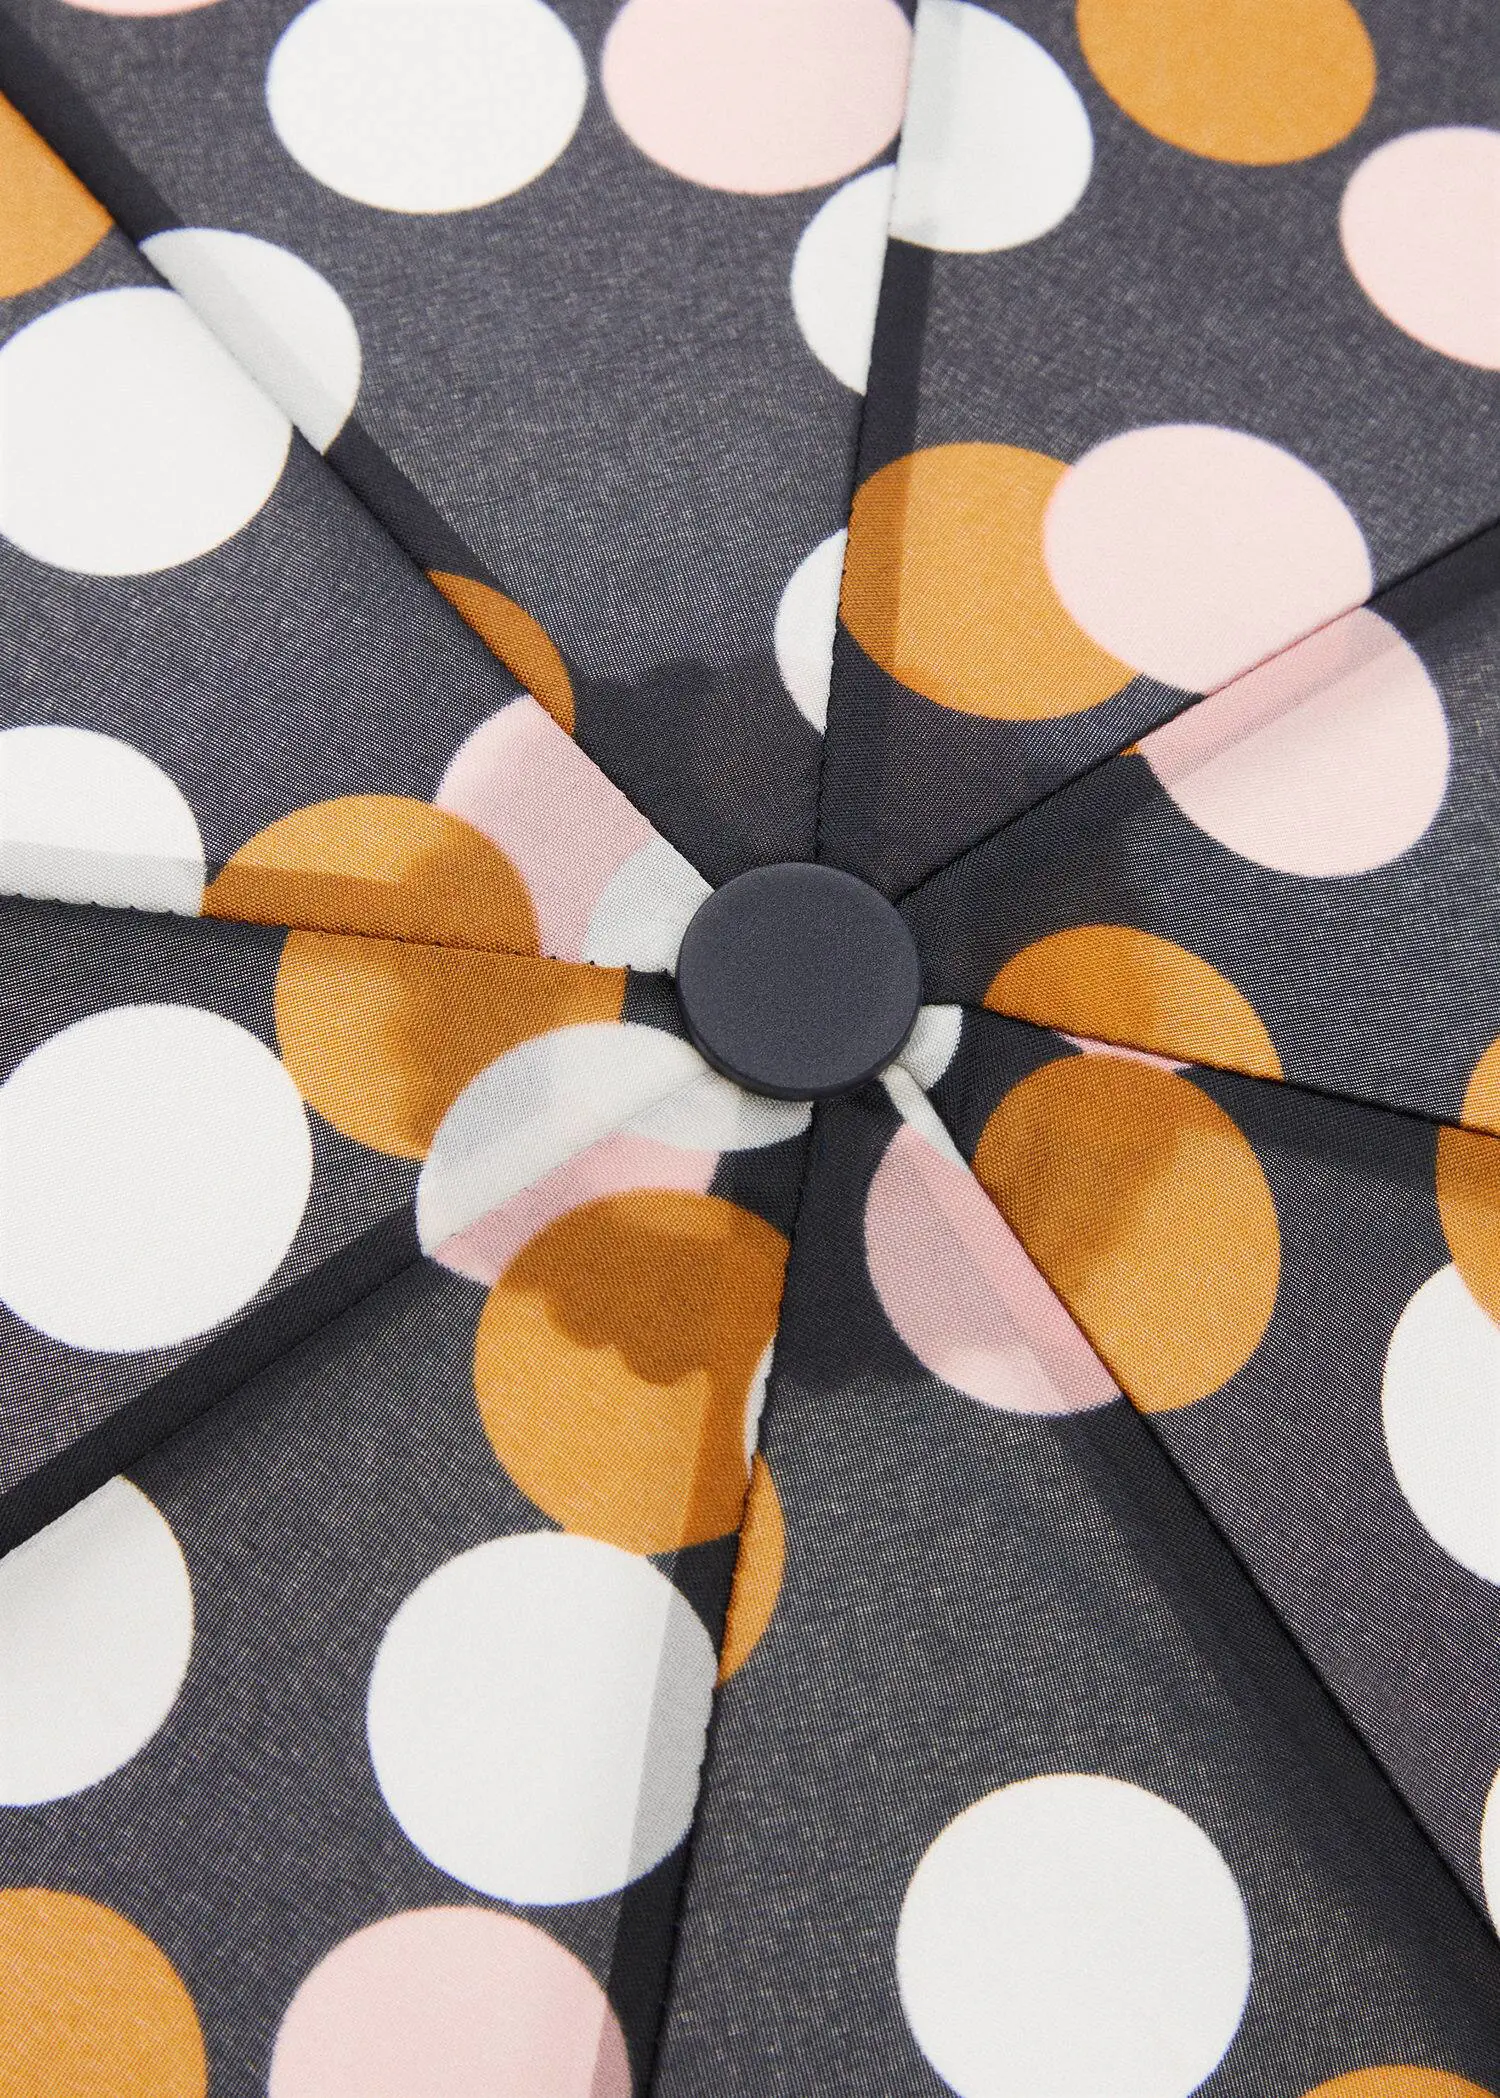 Mango Polka-dot folding umbrella. 2